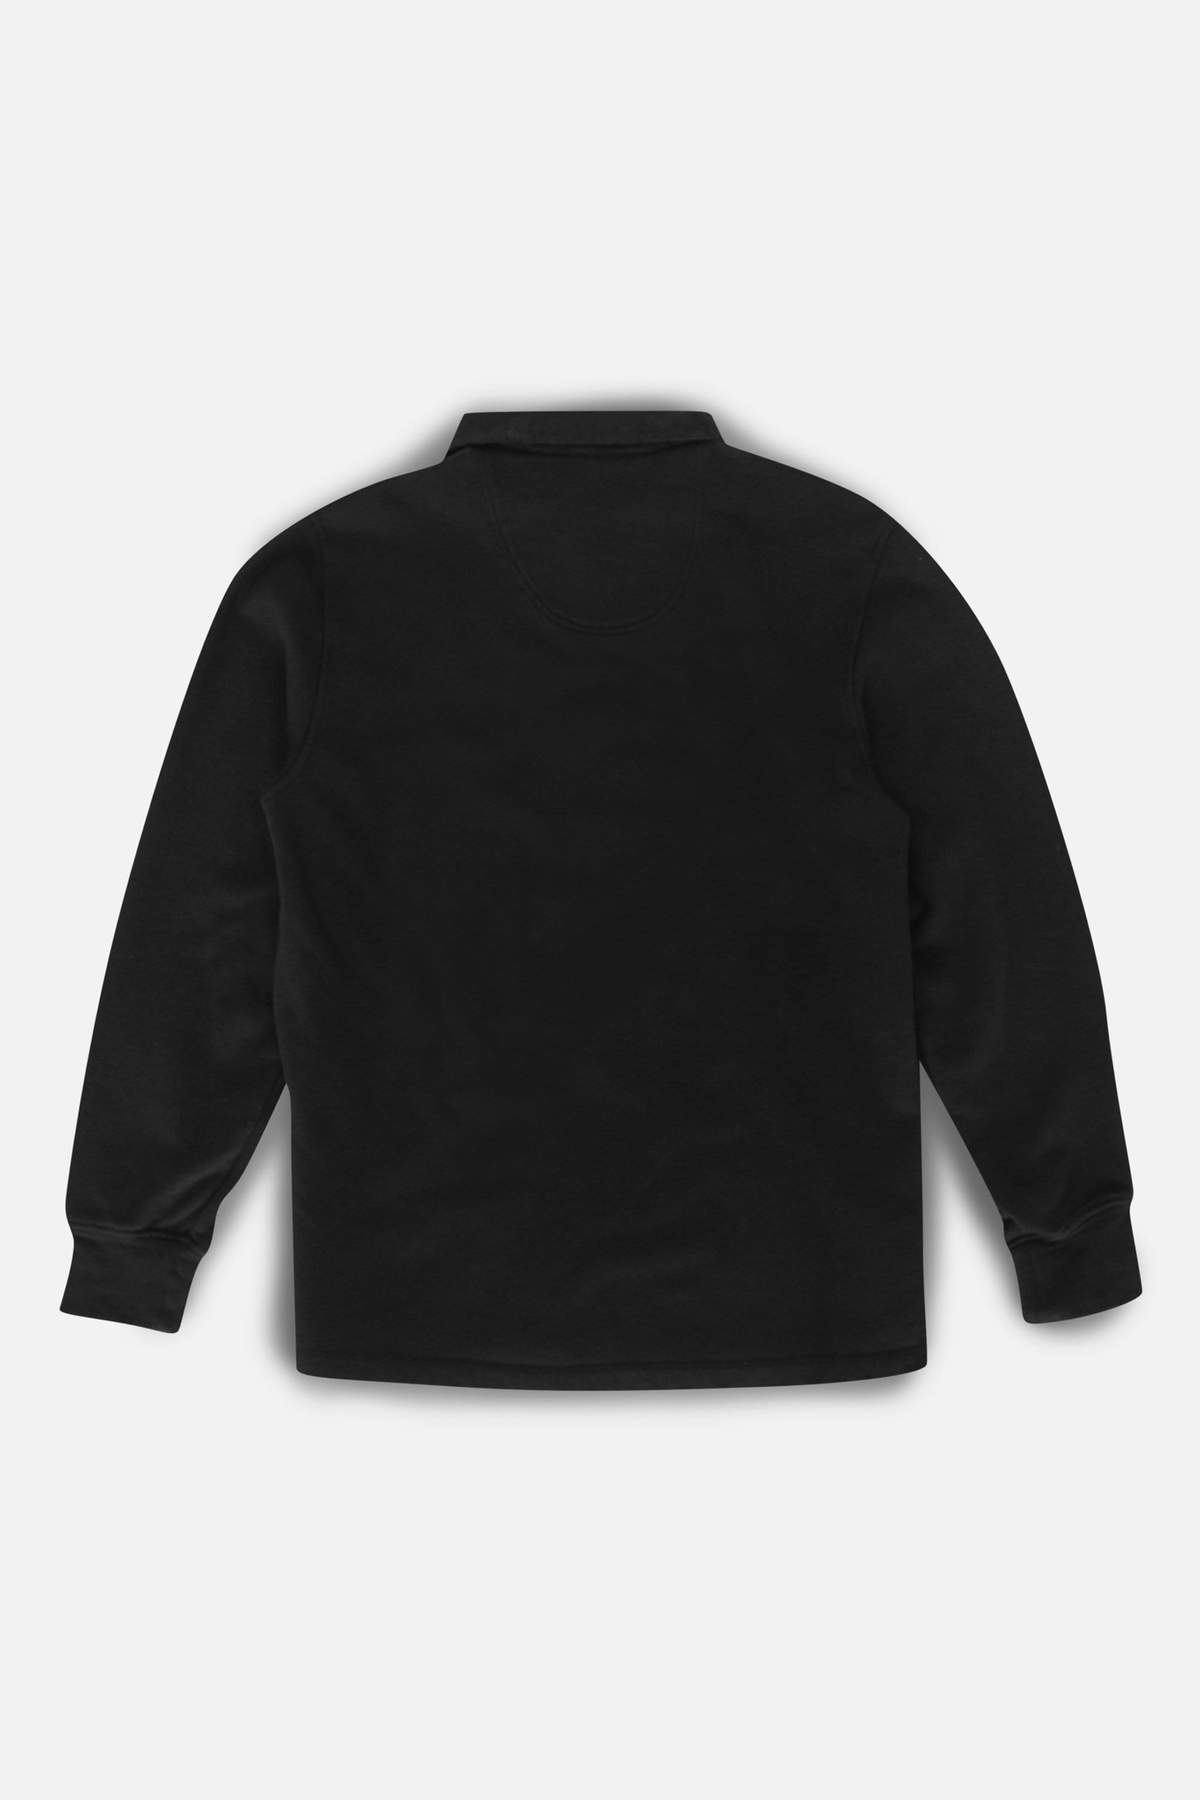 Jonah Organic Rugby Sweatshirt in Black